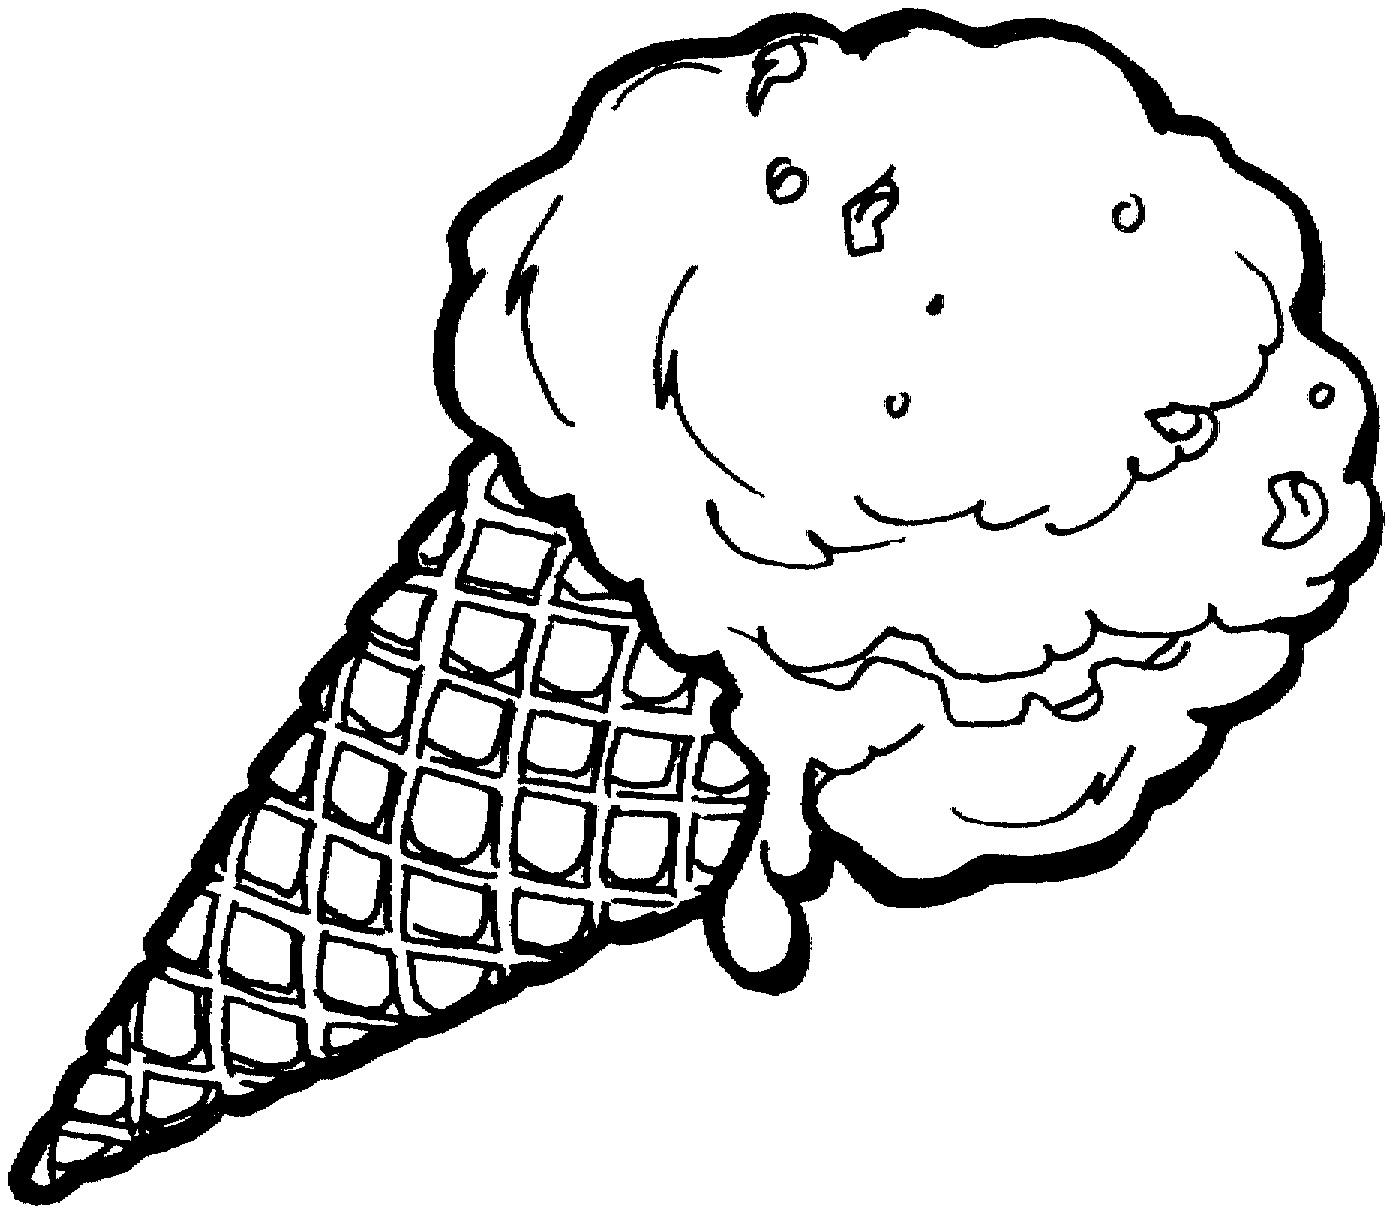 Ice Cream Cone coloring page